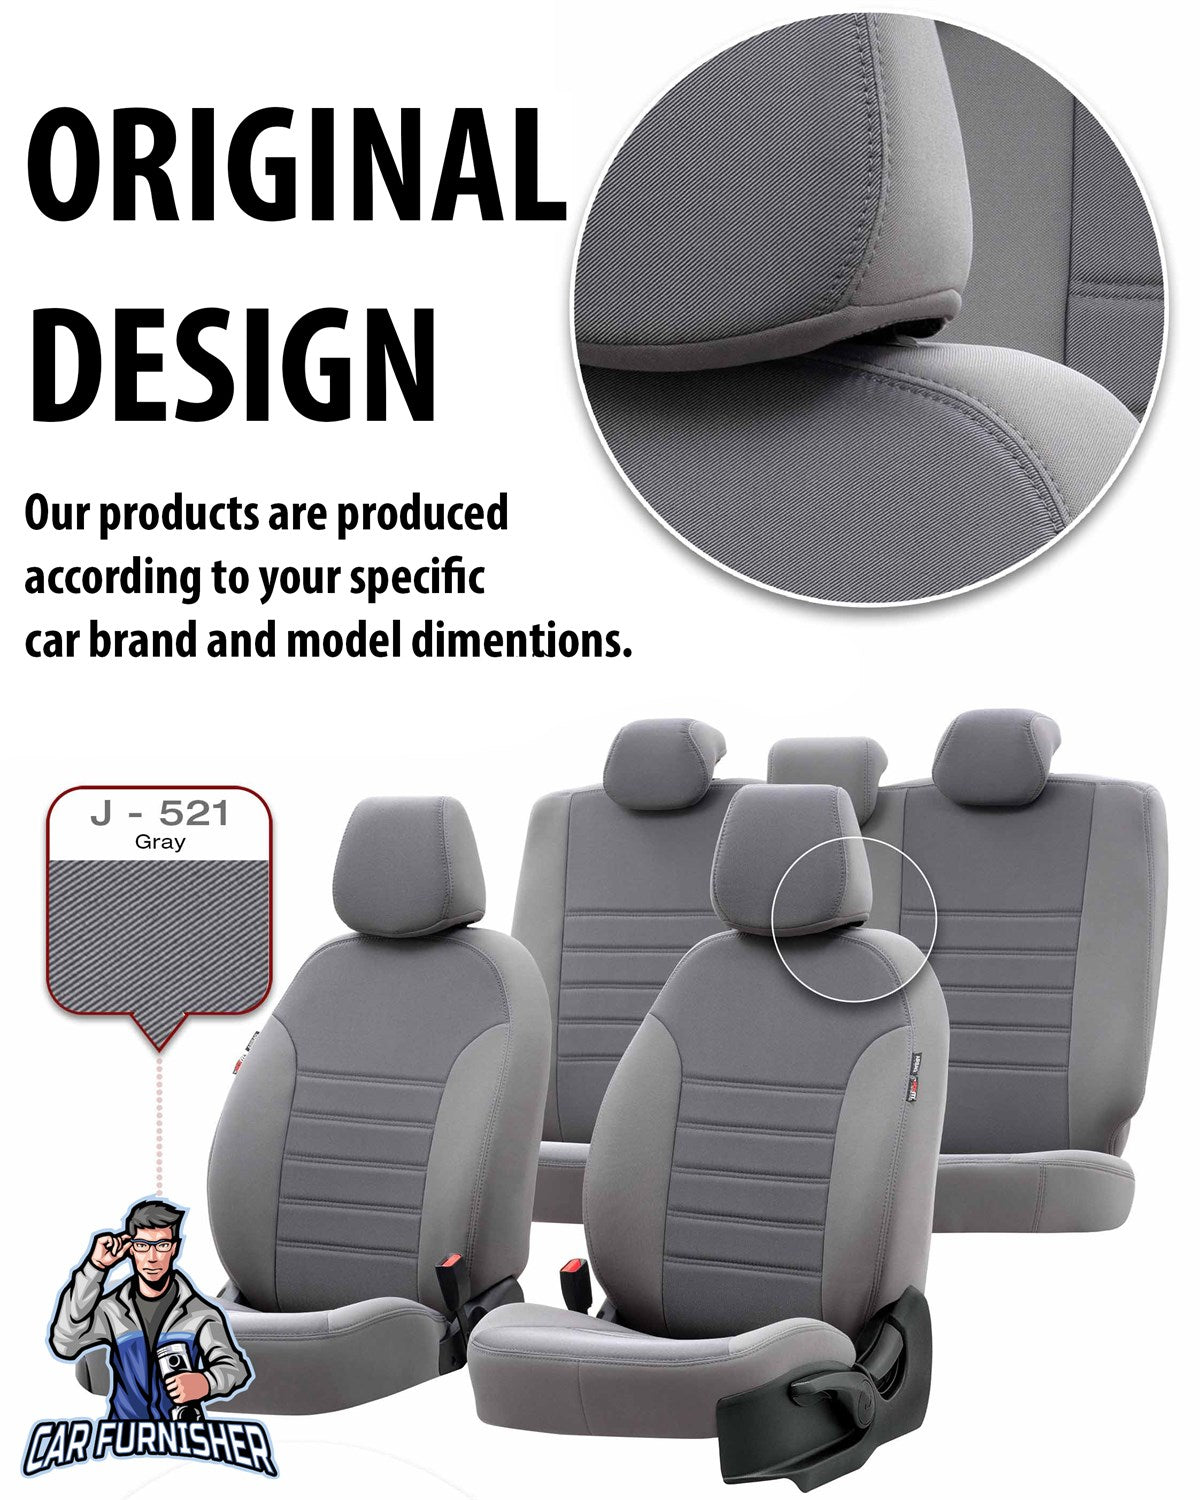 Fiat Marea Seat Covers Original Jacquard Design Dark Beige Jacquard Fabric